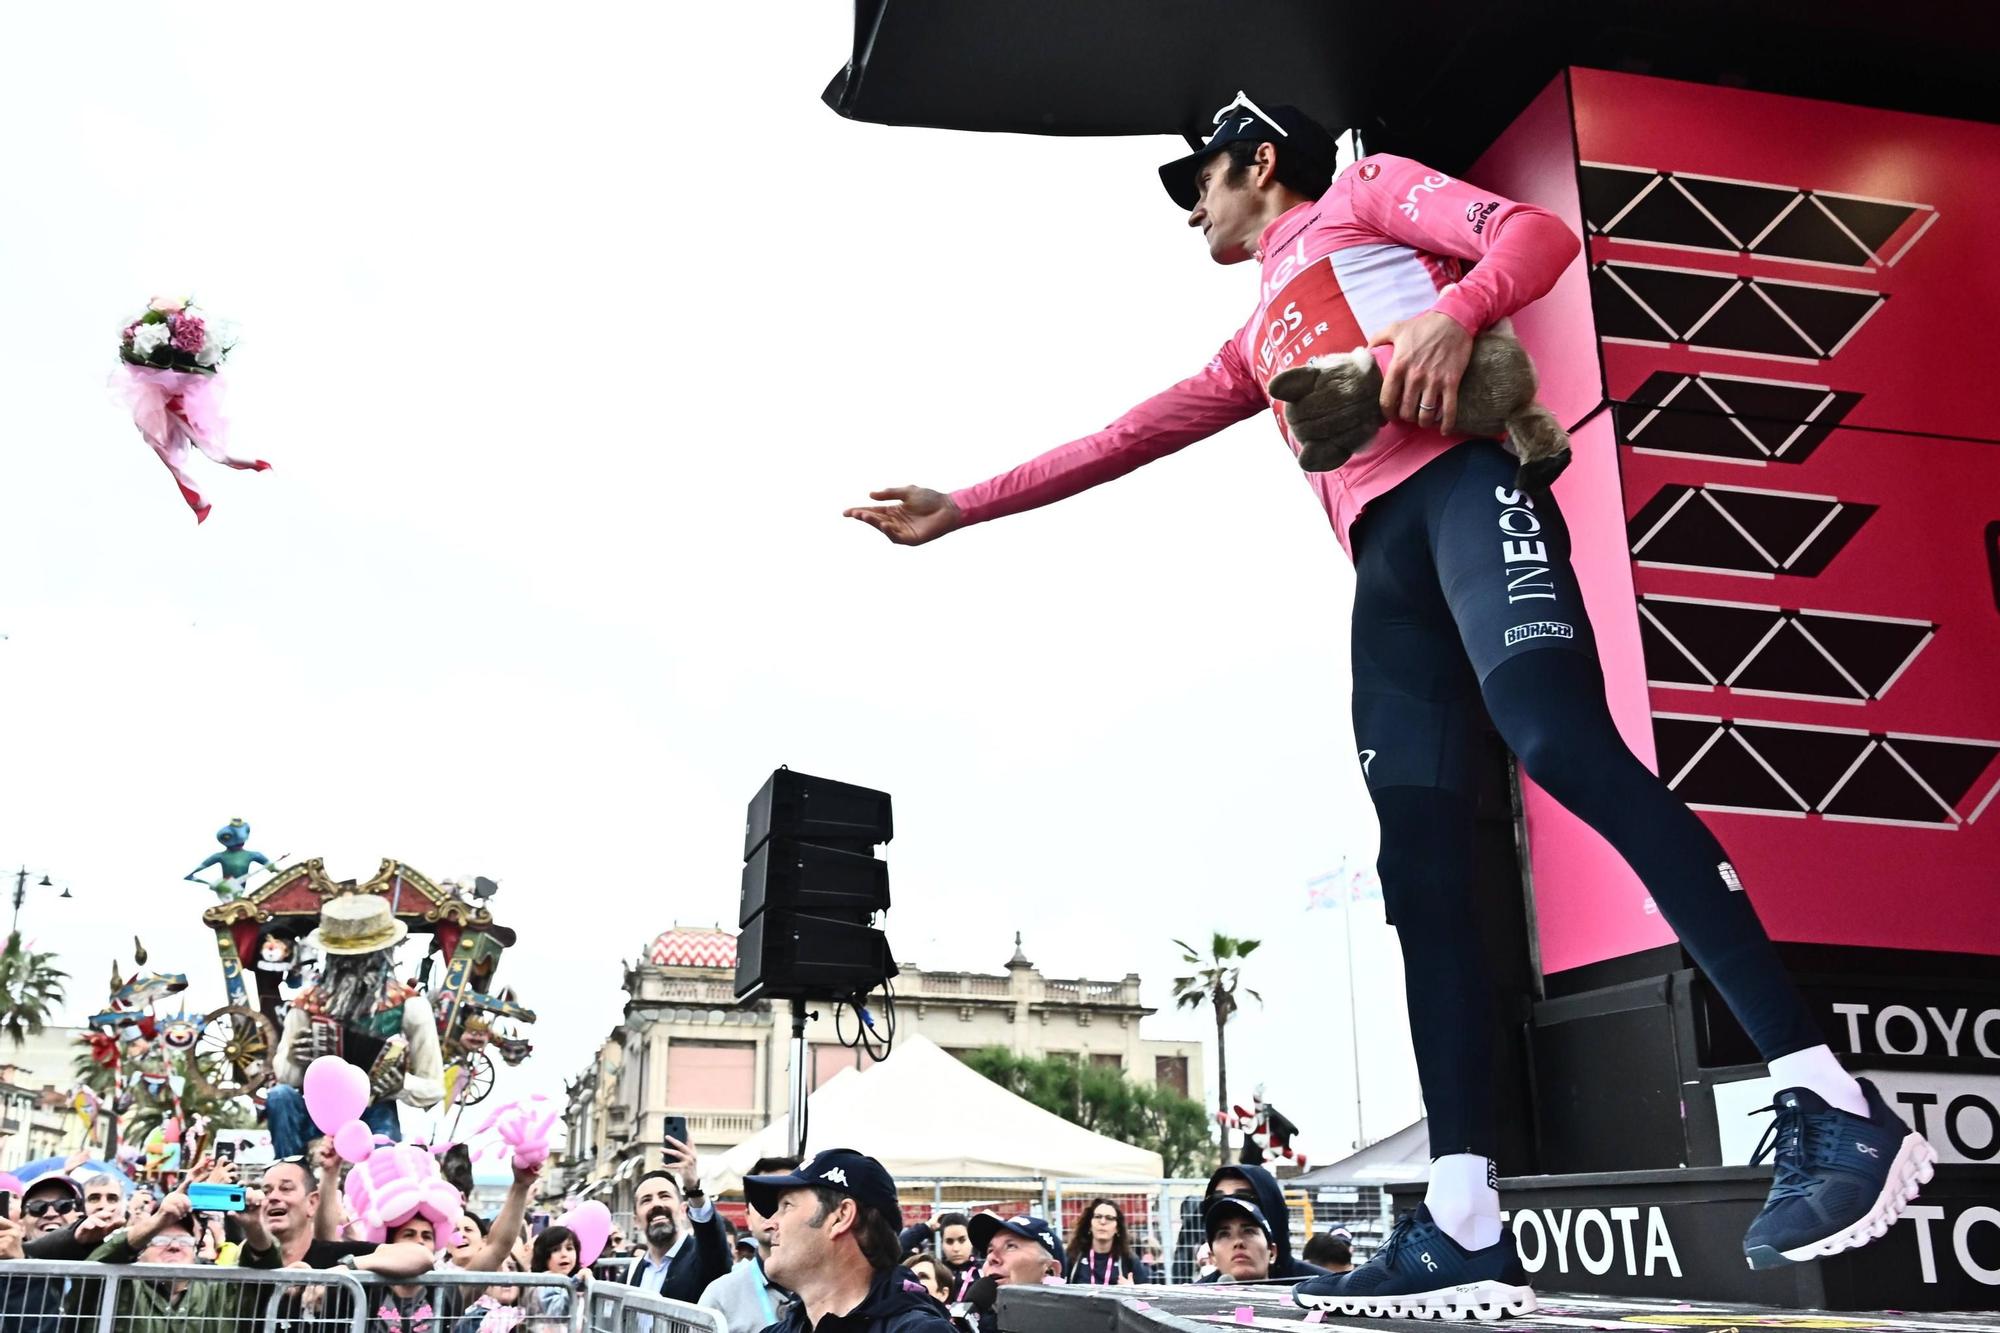 Giro d'Italia - 10th stage